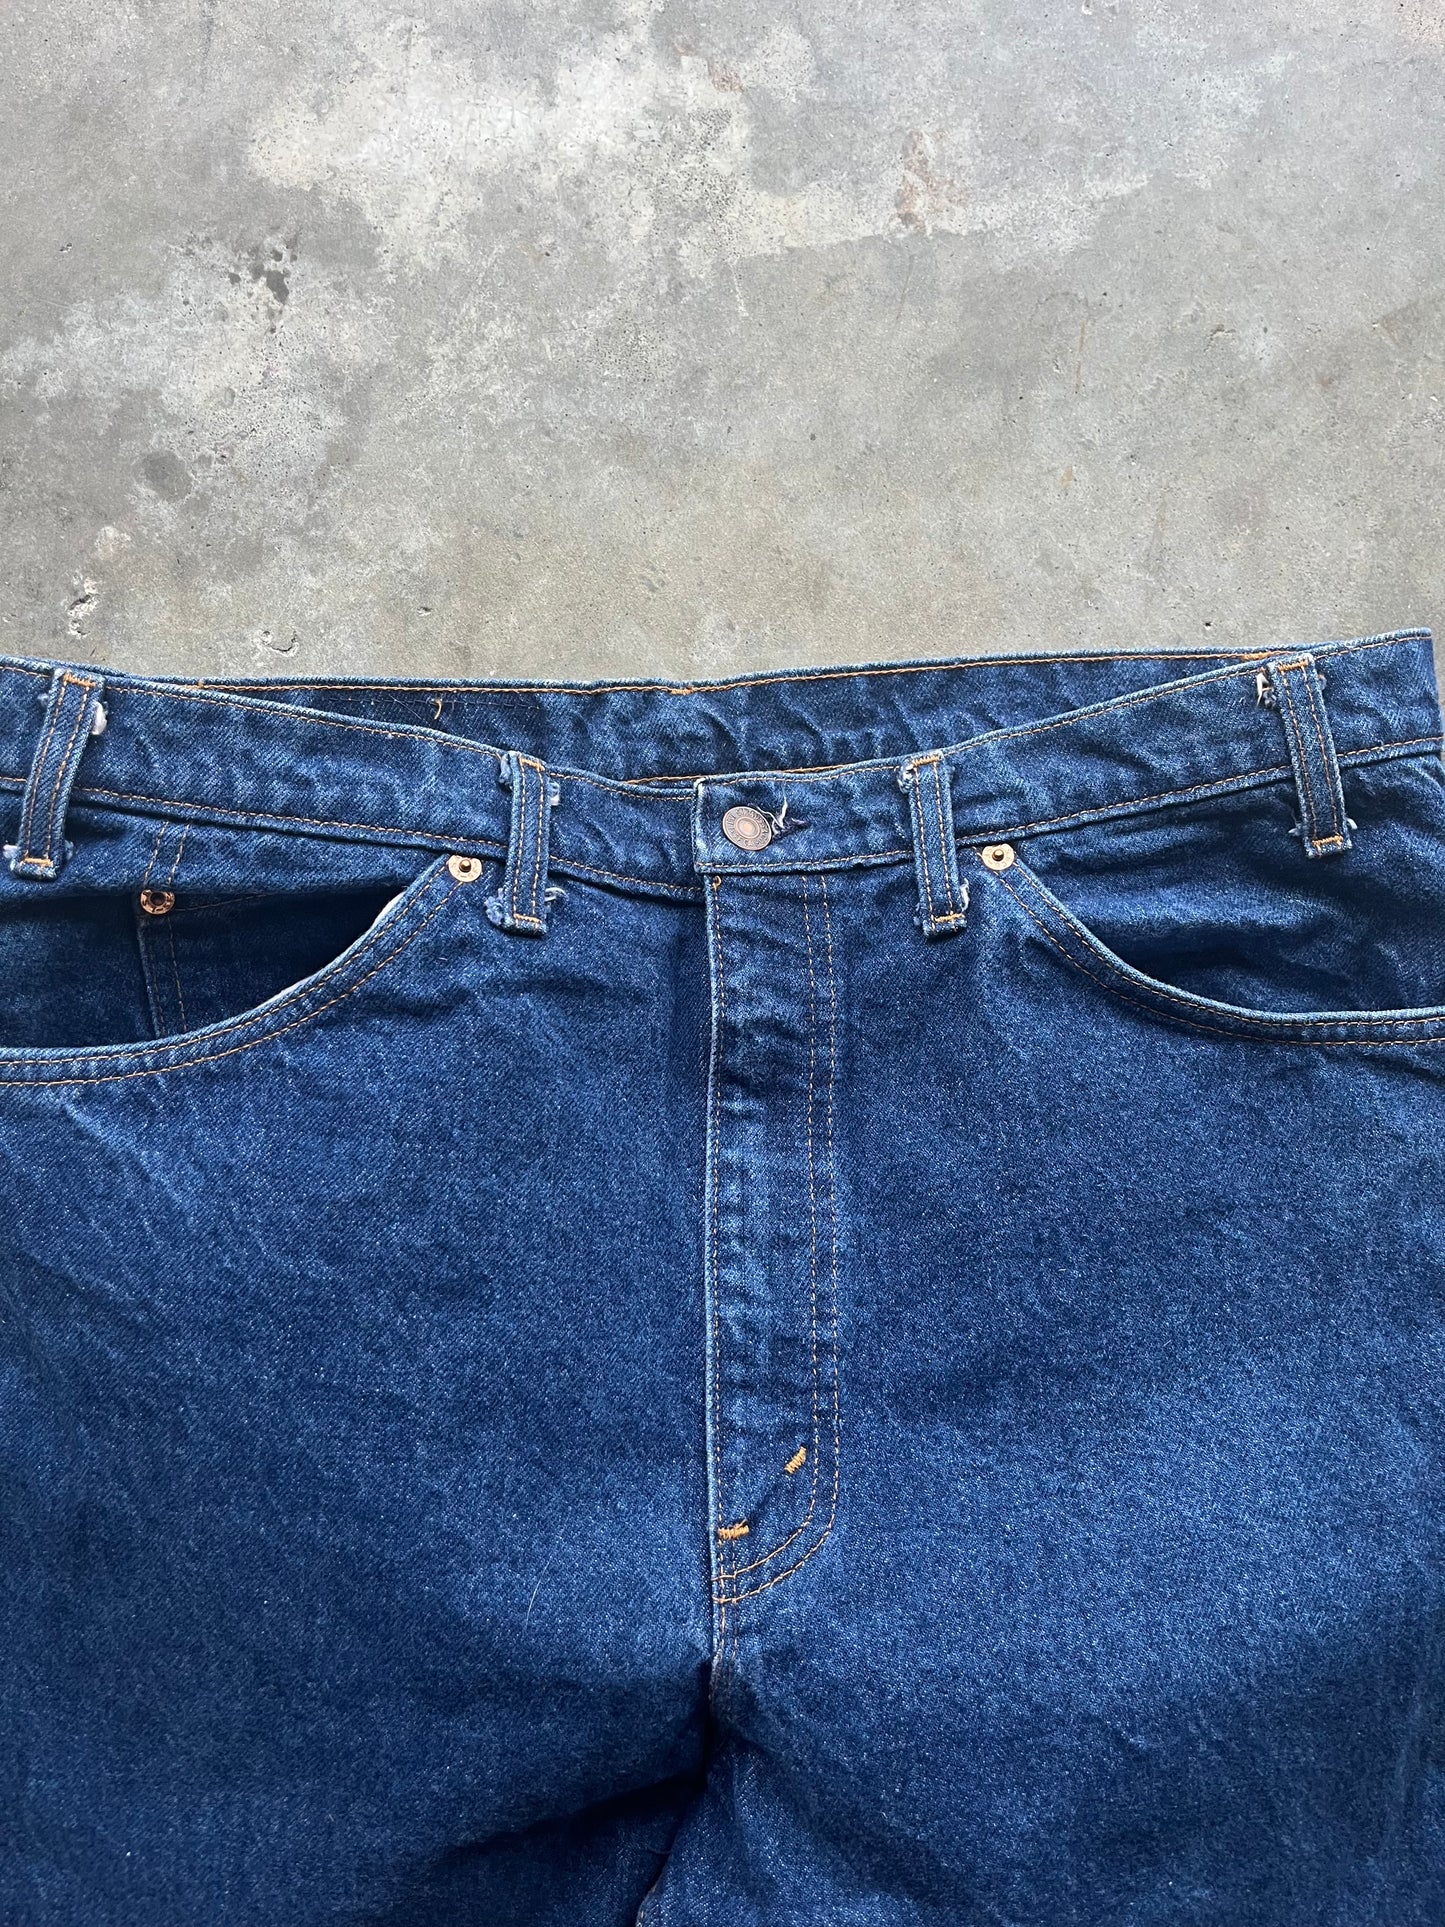 (38 x 30) Levi Denim 517 Orange Tab Jeans